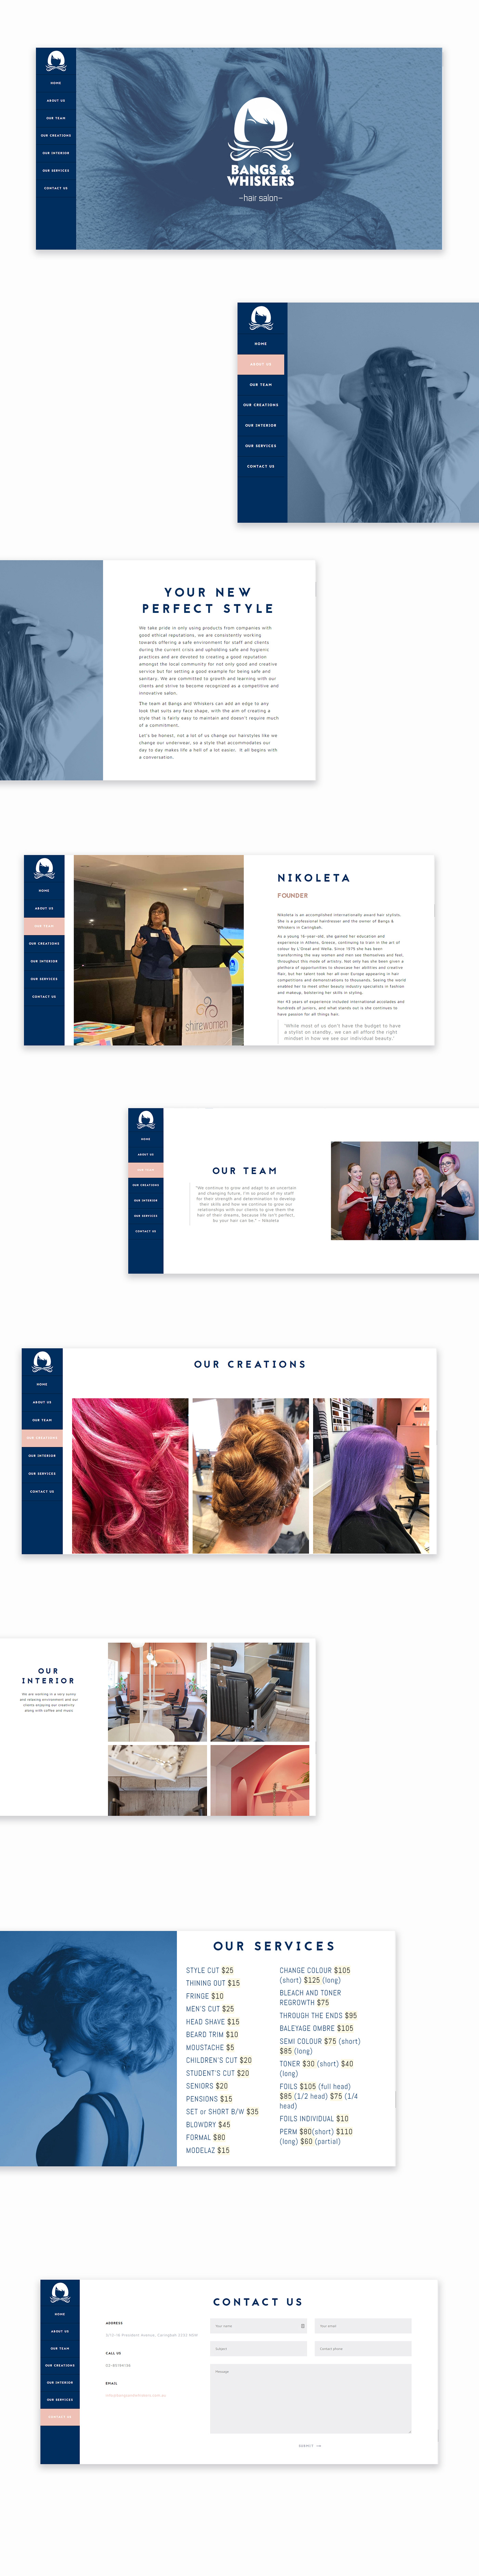 Hair Salon Web Design  web development  Website